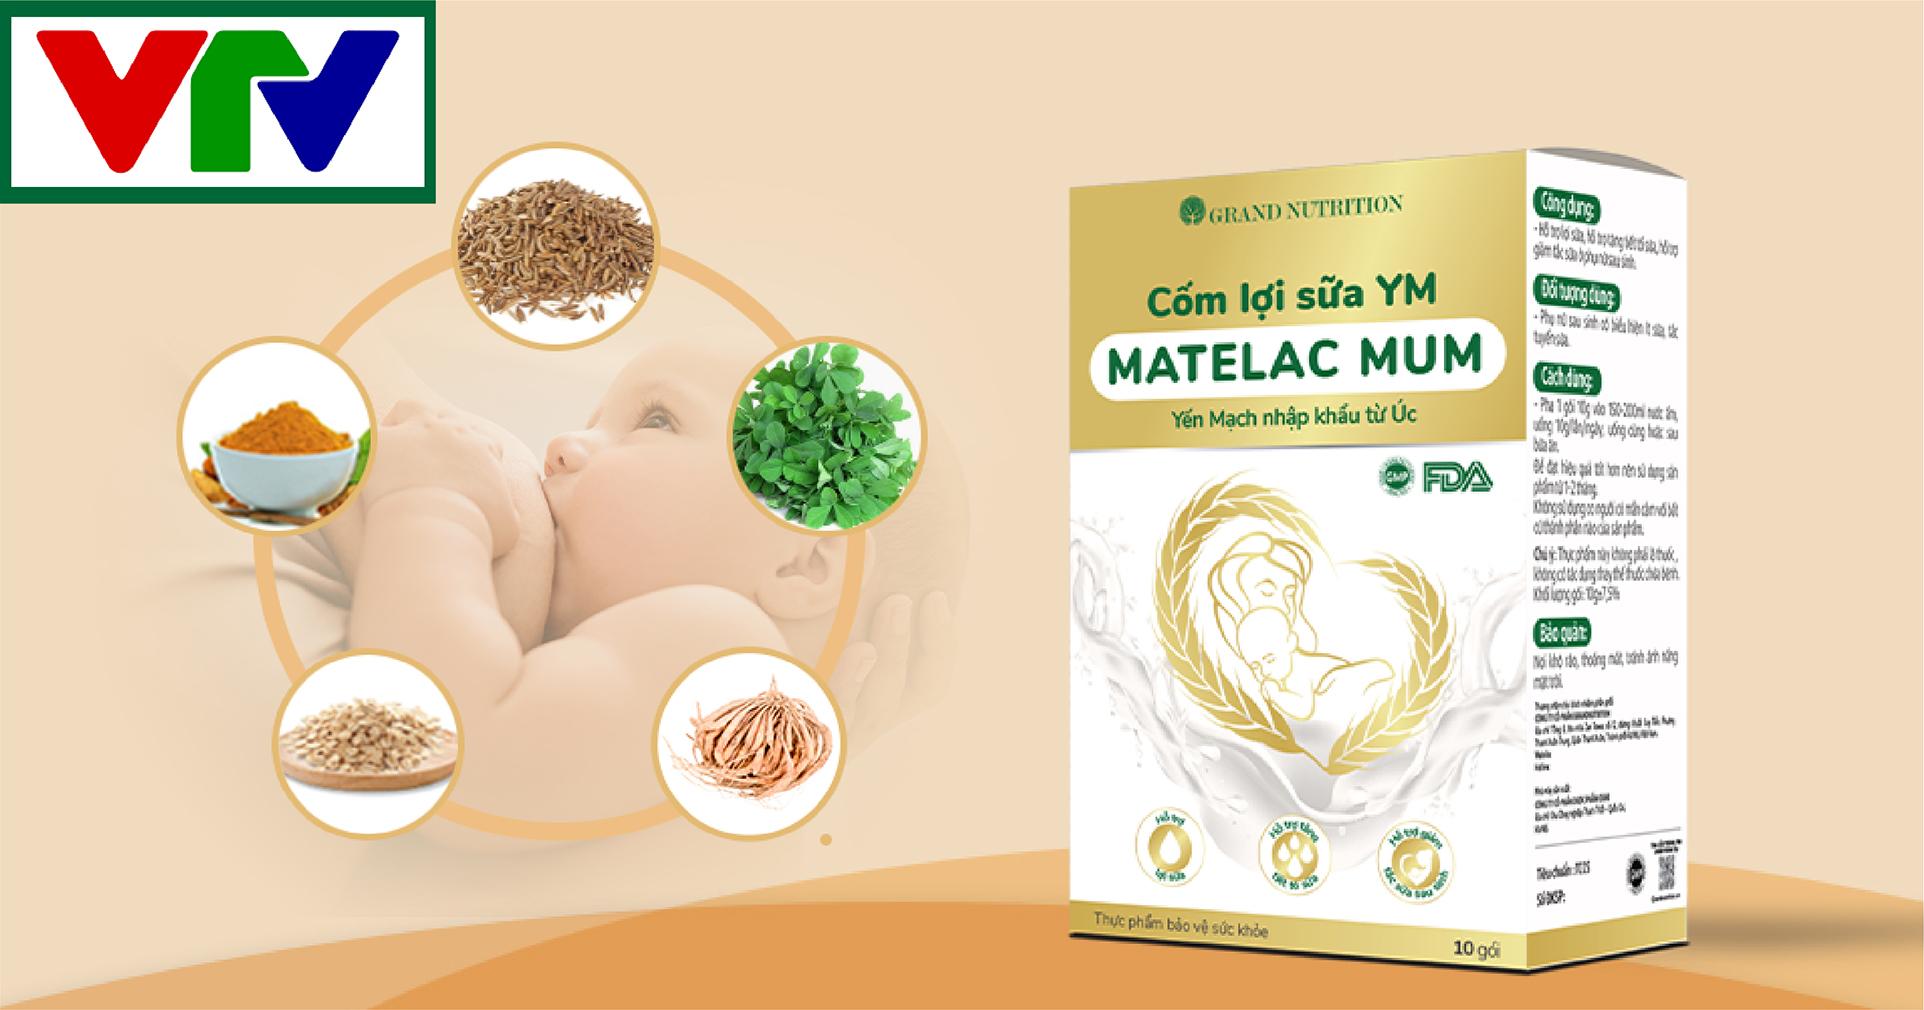 Cốm lợi sữa YM Matelac Mum: Sữa mát, dáng thon, con bụ sữa